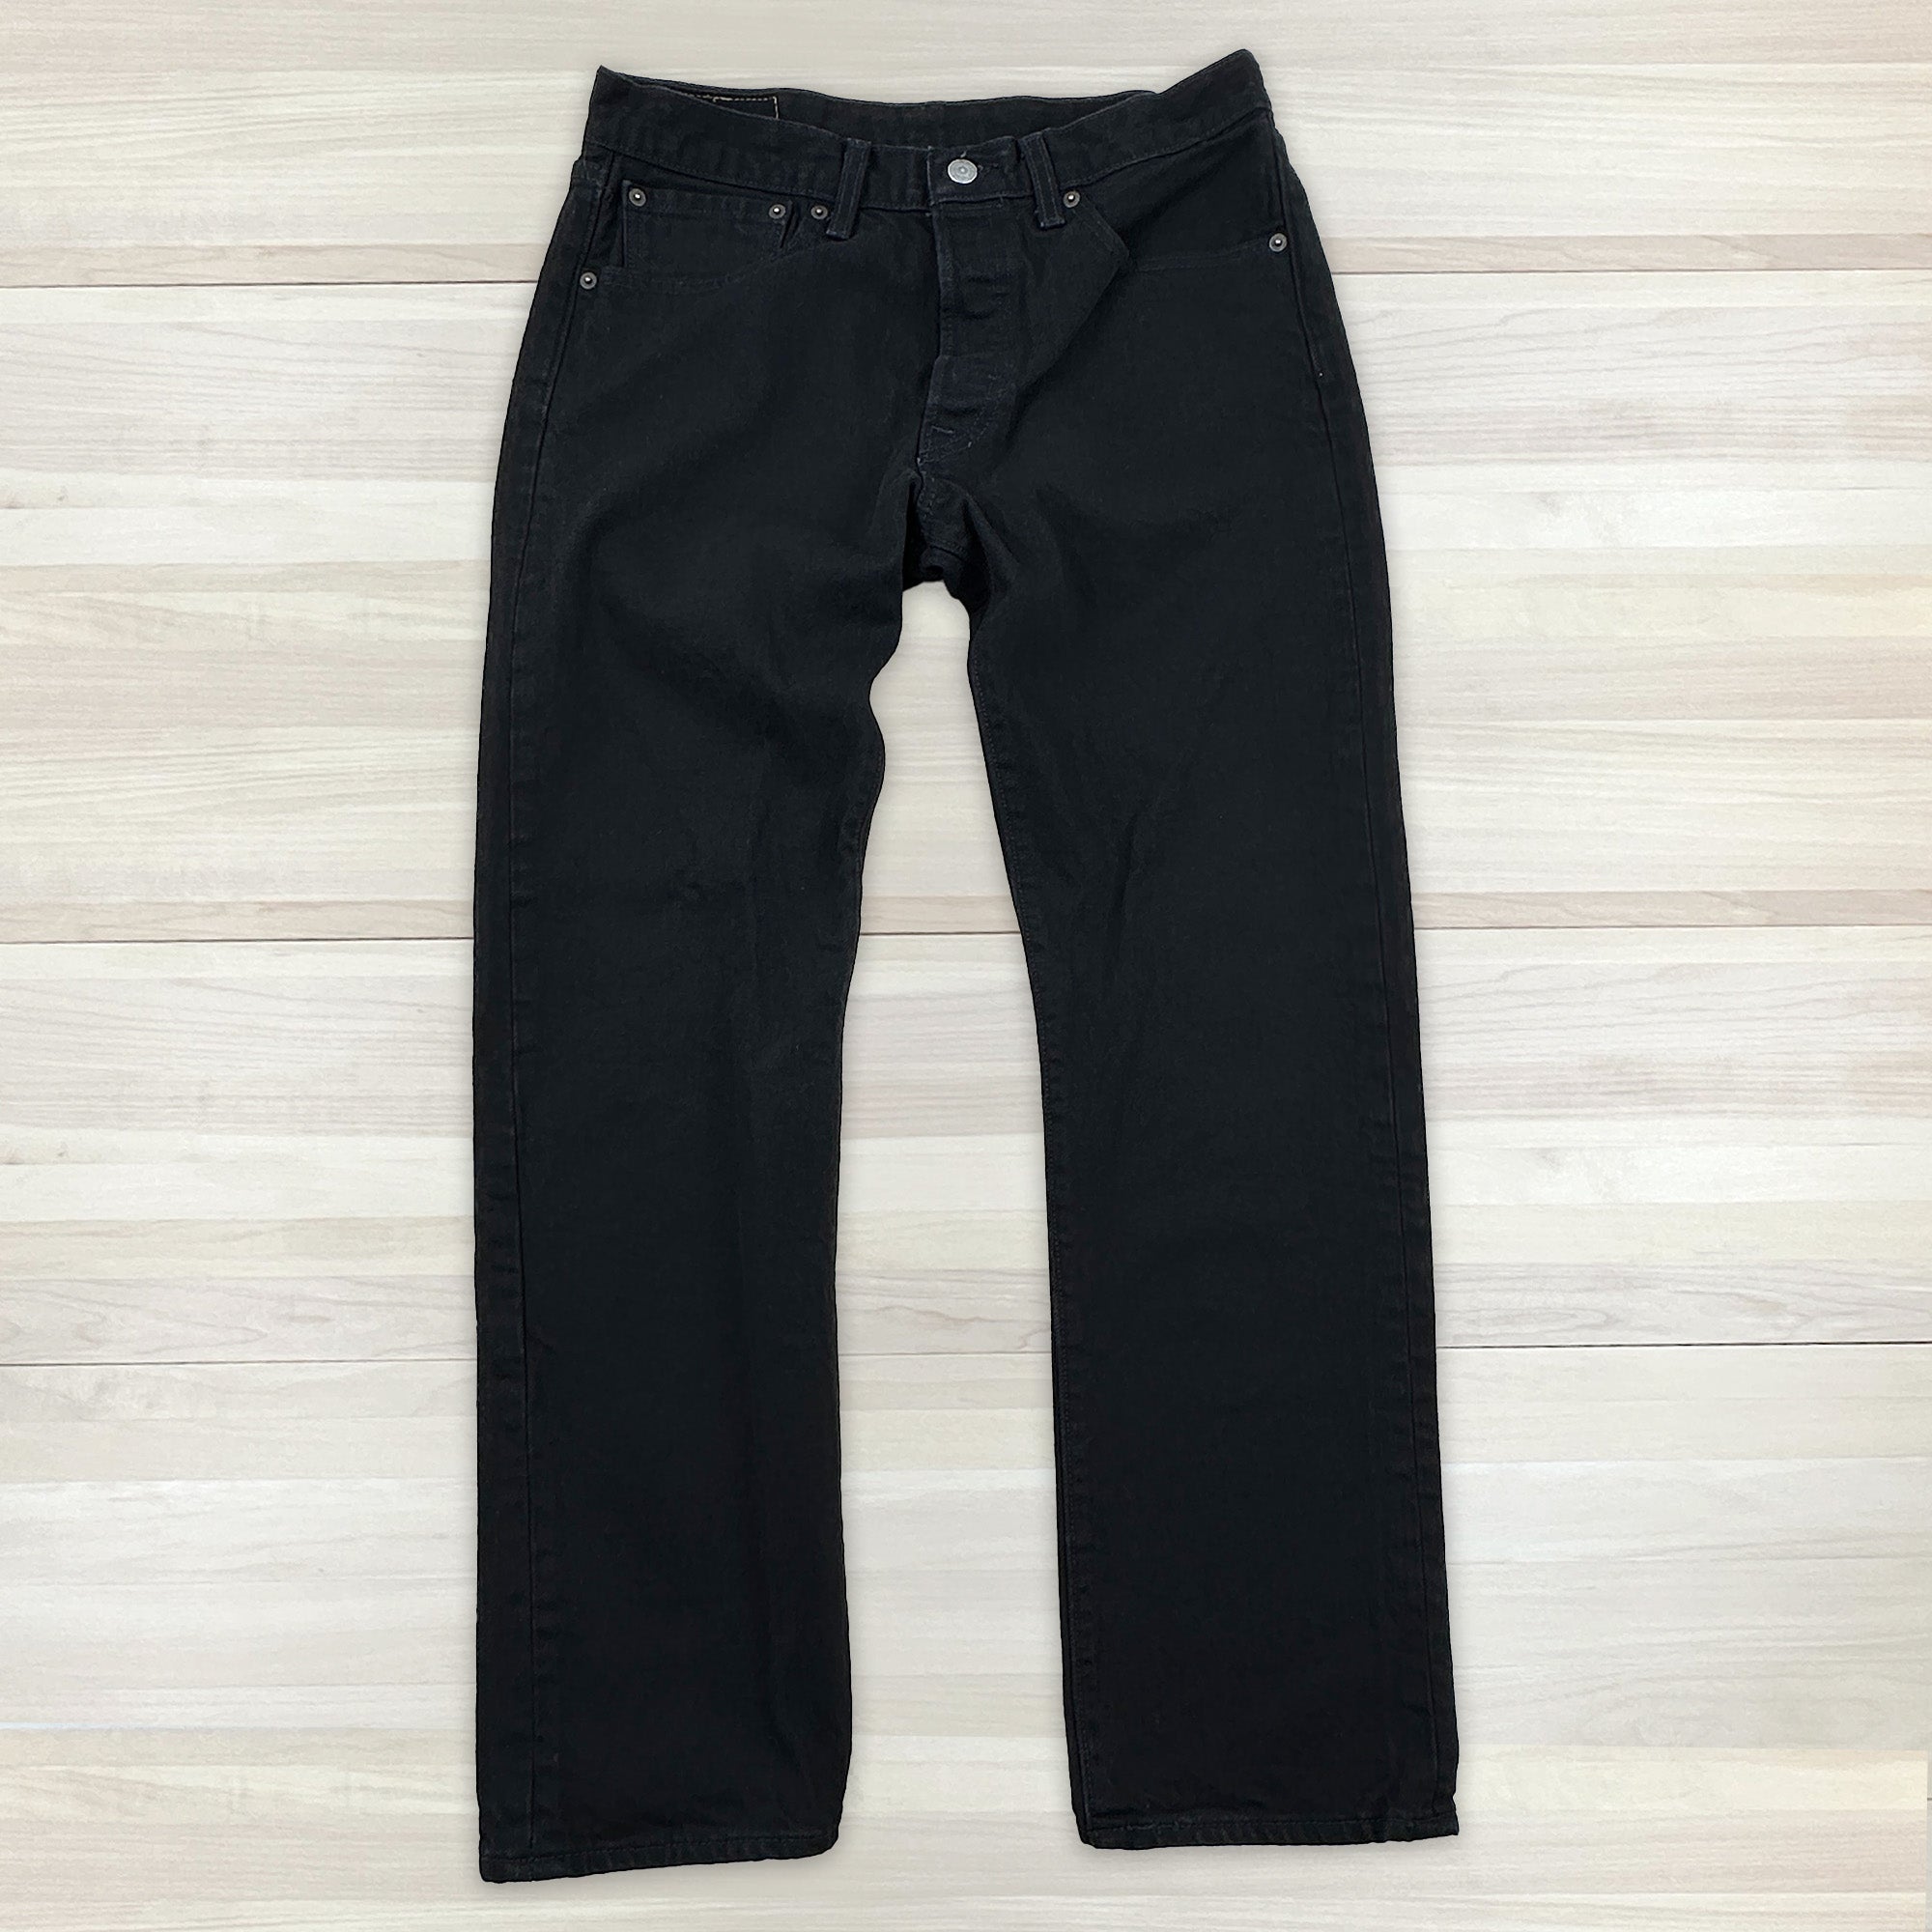 Men's Black Levi's 501 Straight Leg Jeans - Tagged: 31x30 / Measures 30x29